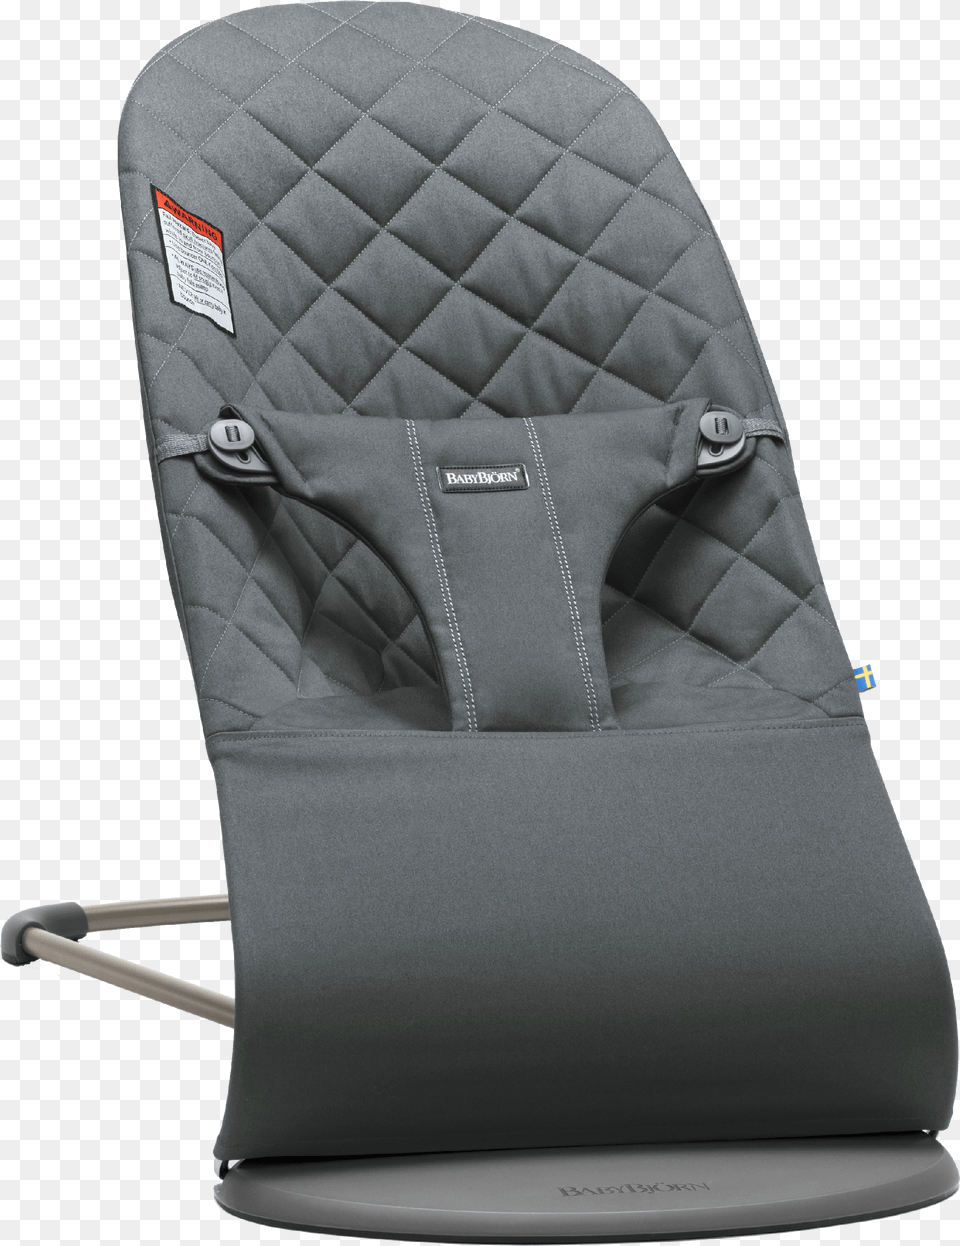 Car Seat, Furniture, Accessories, Bag, Chair Png